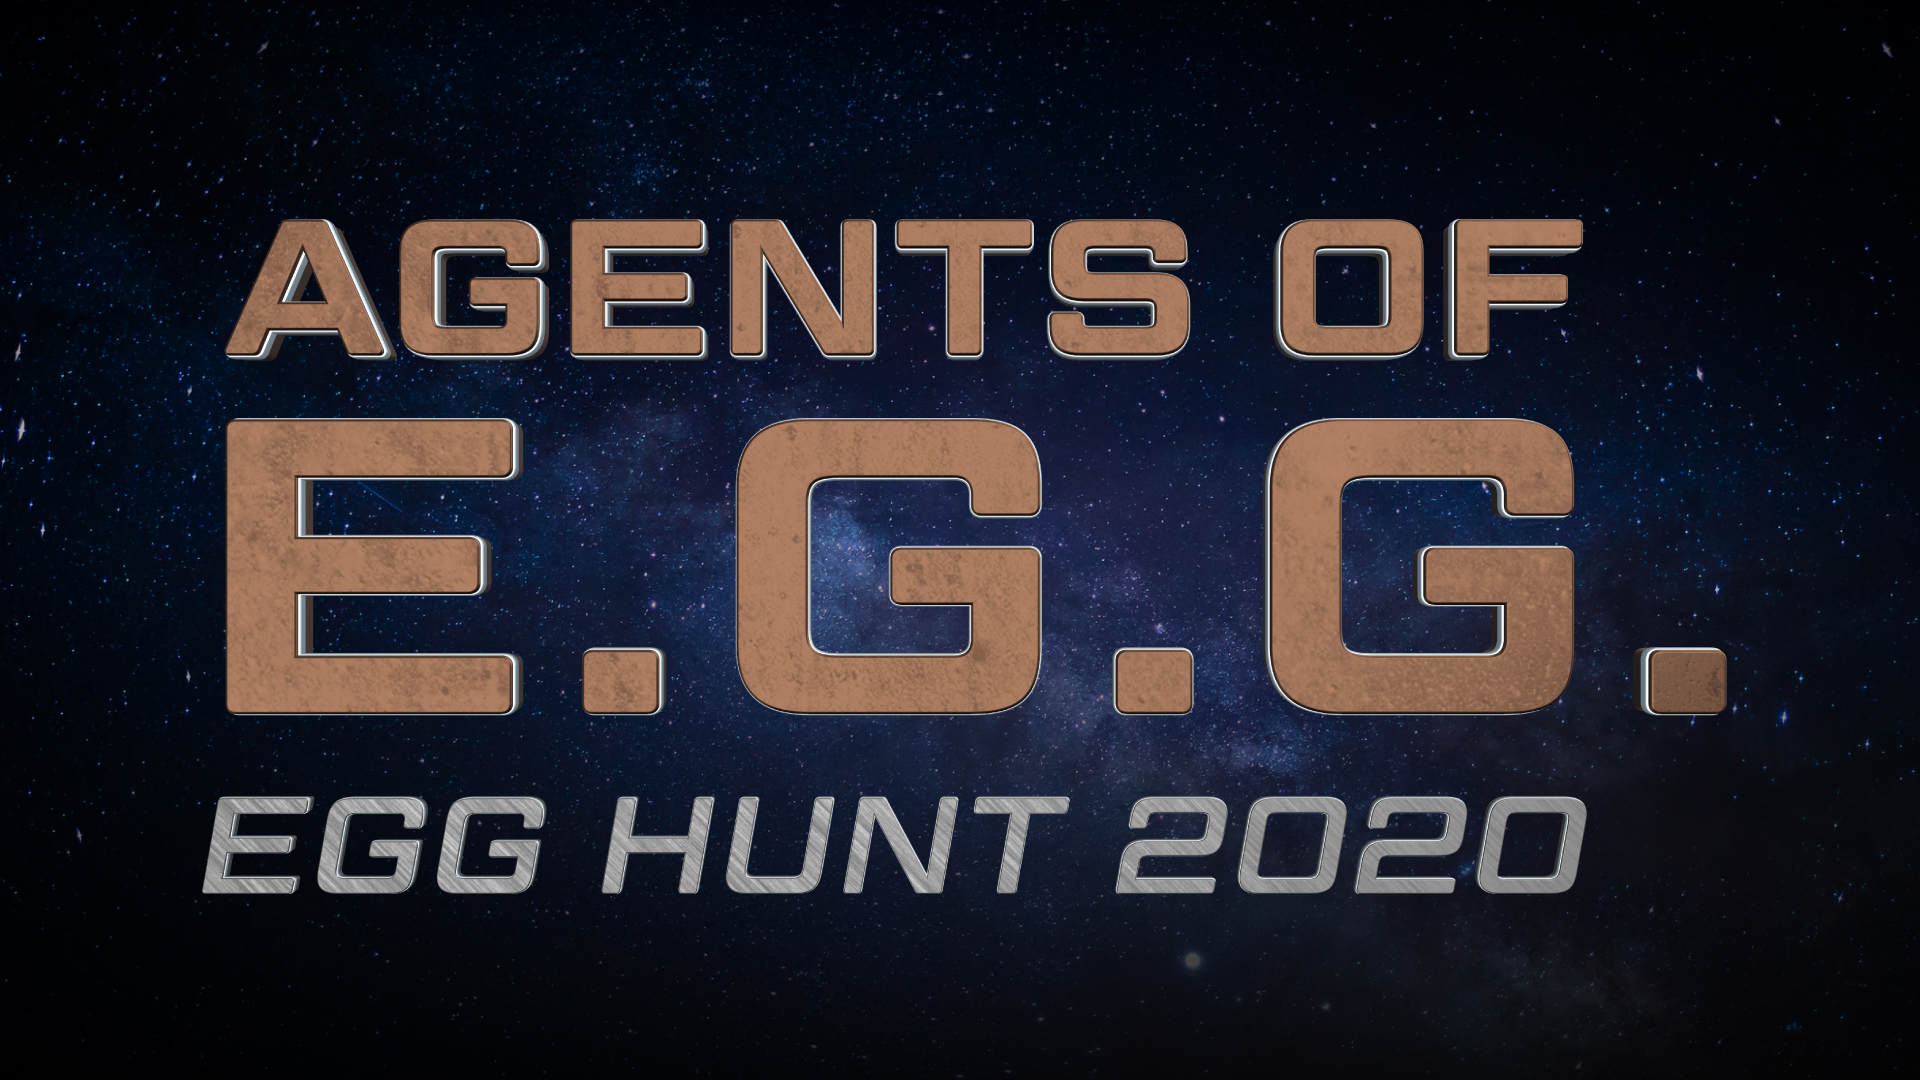 Egg Hunt 2020 Agents Of E G G Roblox Wikia Fandom